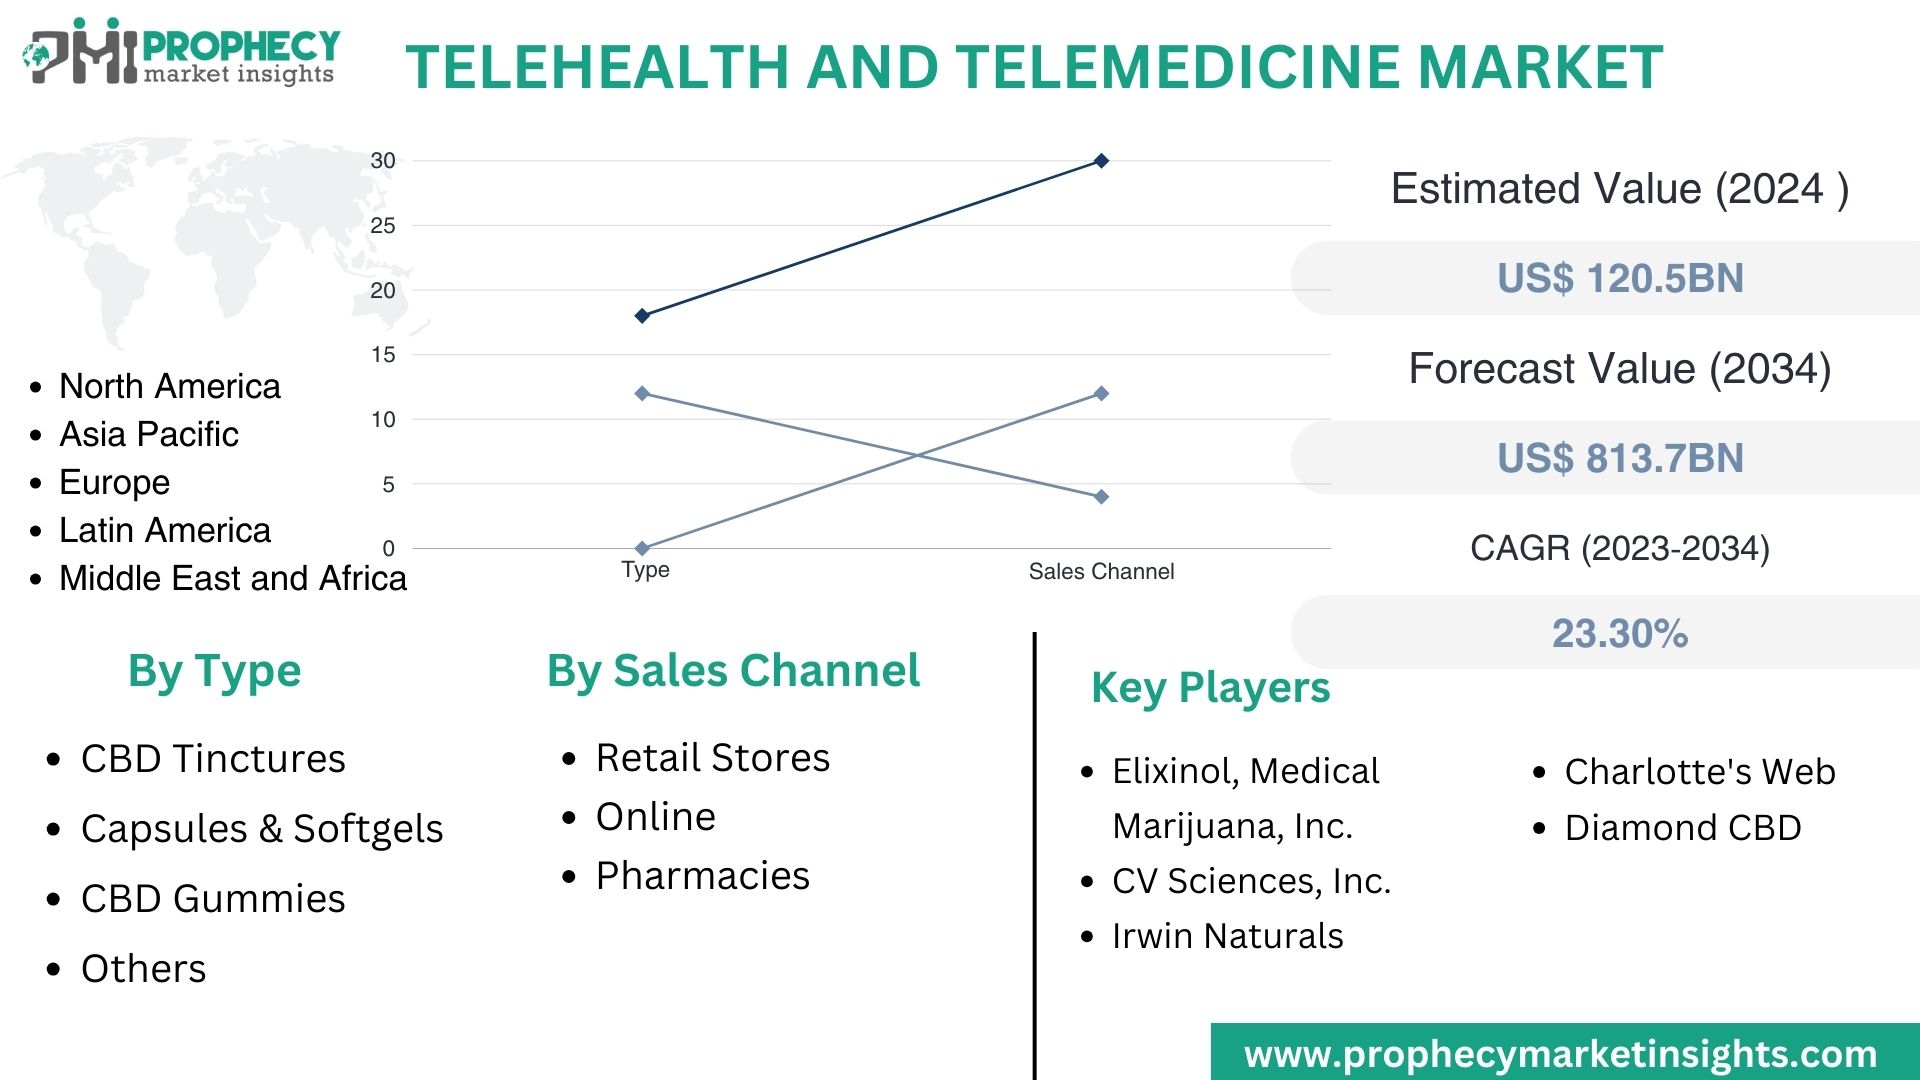 Telehealth and Telemedicine Market